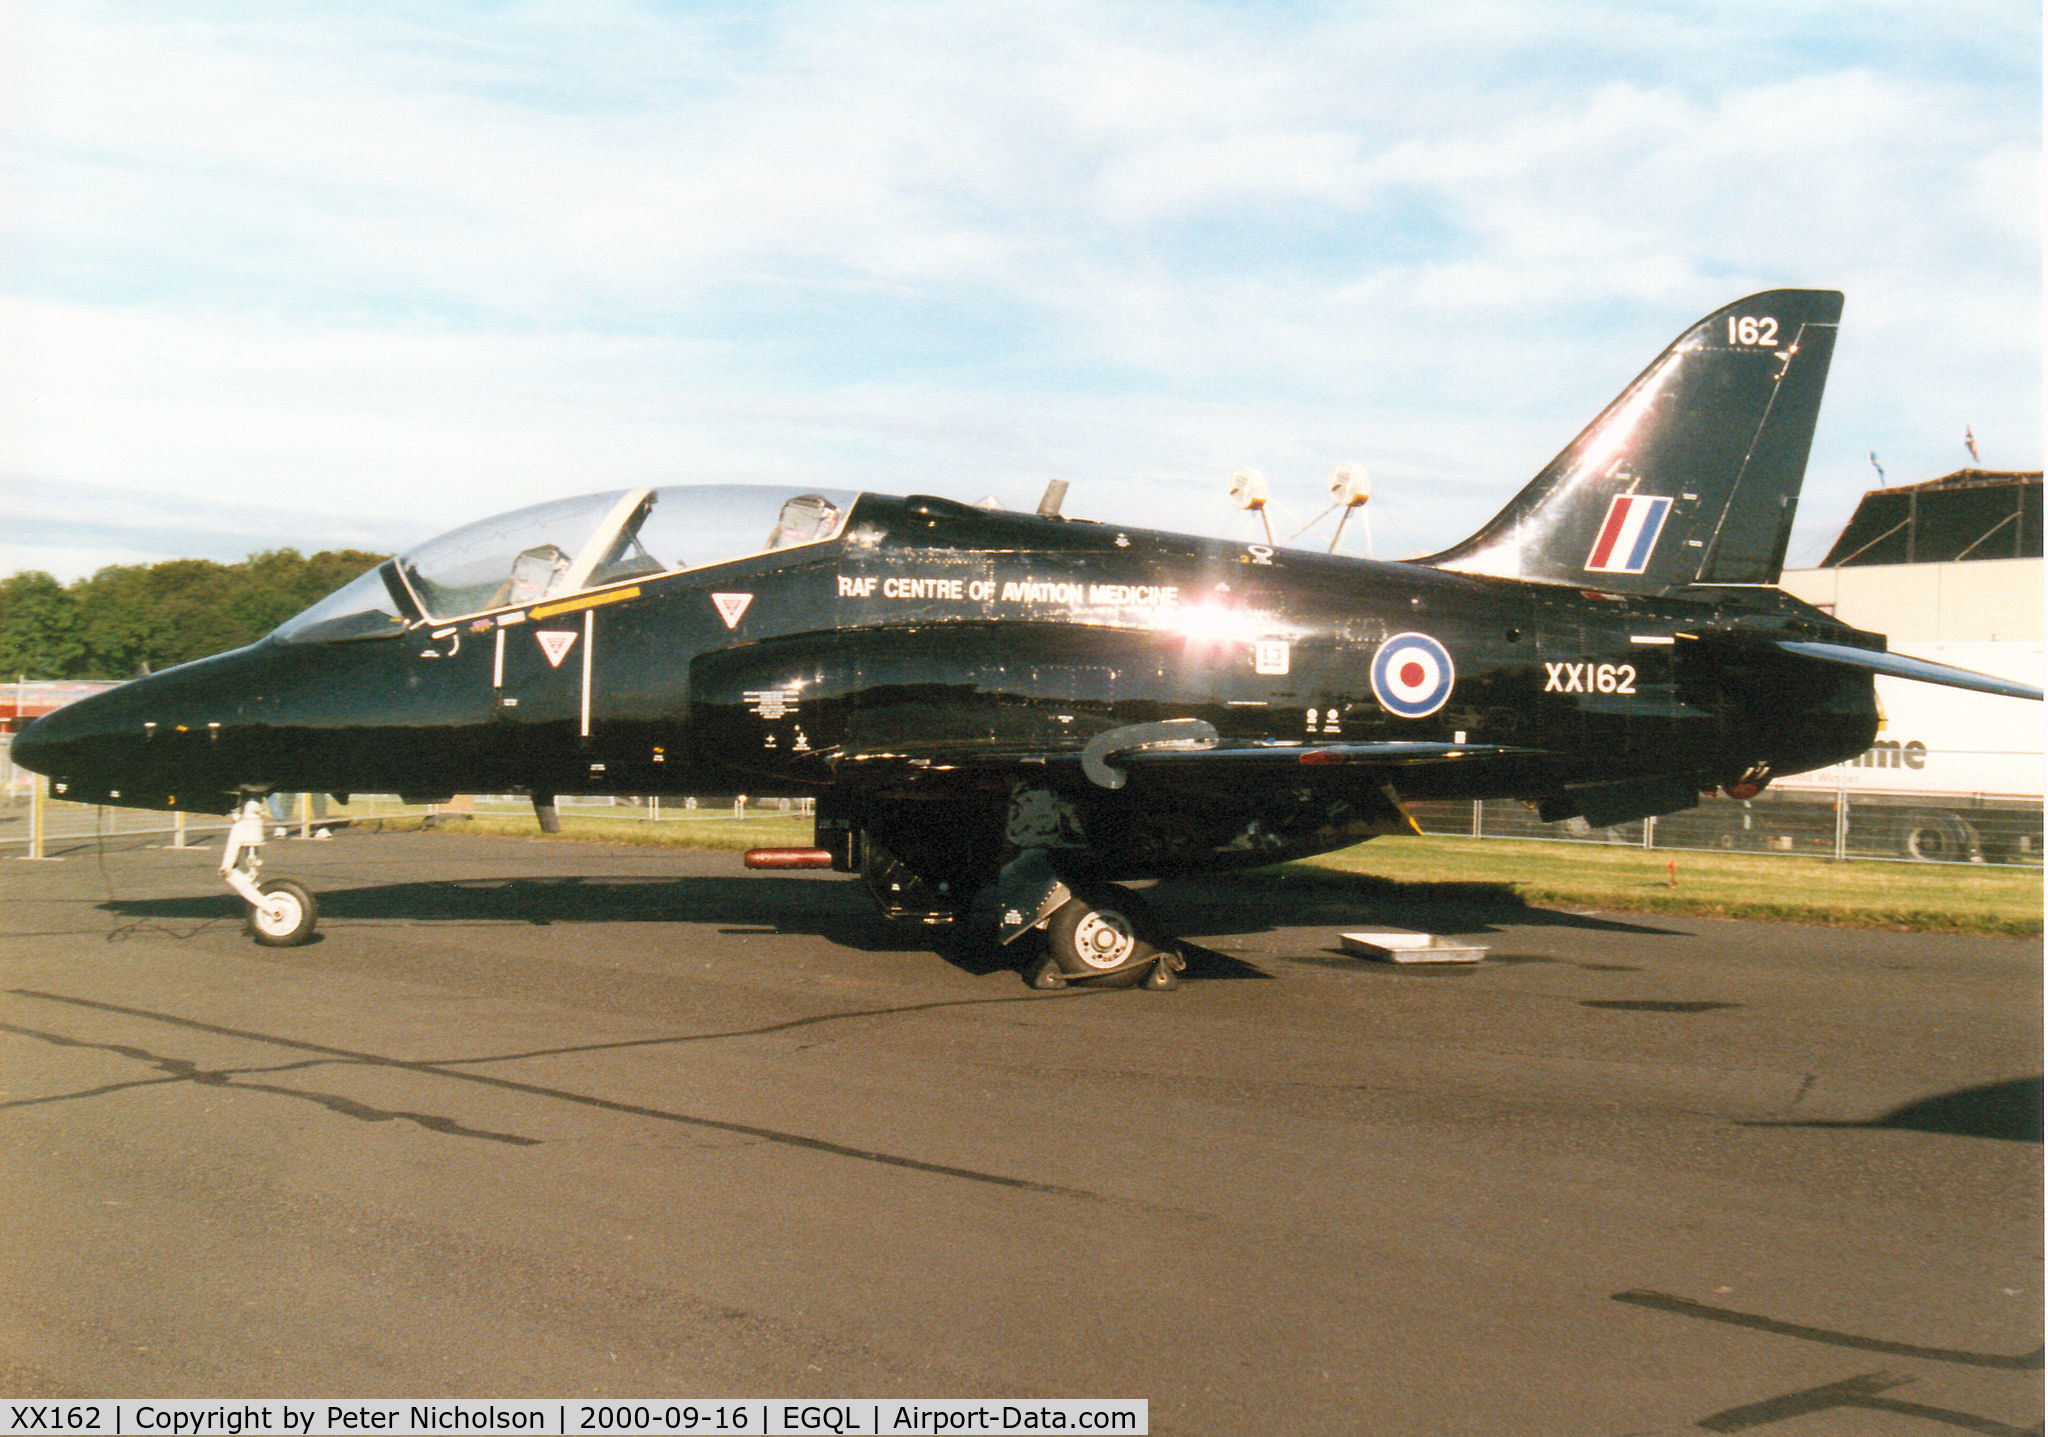 XX162, 1976 Hawker Siddeley Hawk T.1 C/N 009/312009, Hawk T.1, callsign Gauntlet 21, of the Centre of Aviation Medicine on display at the 2000 RAF Leuchars Airshow.